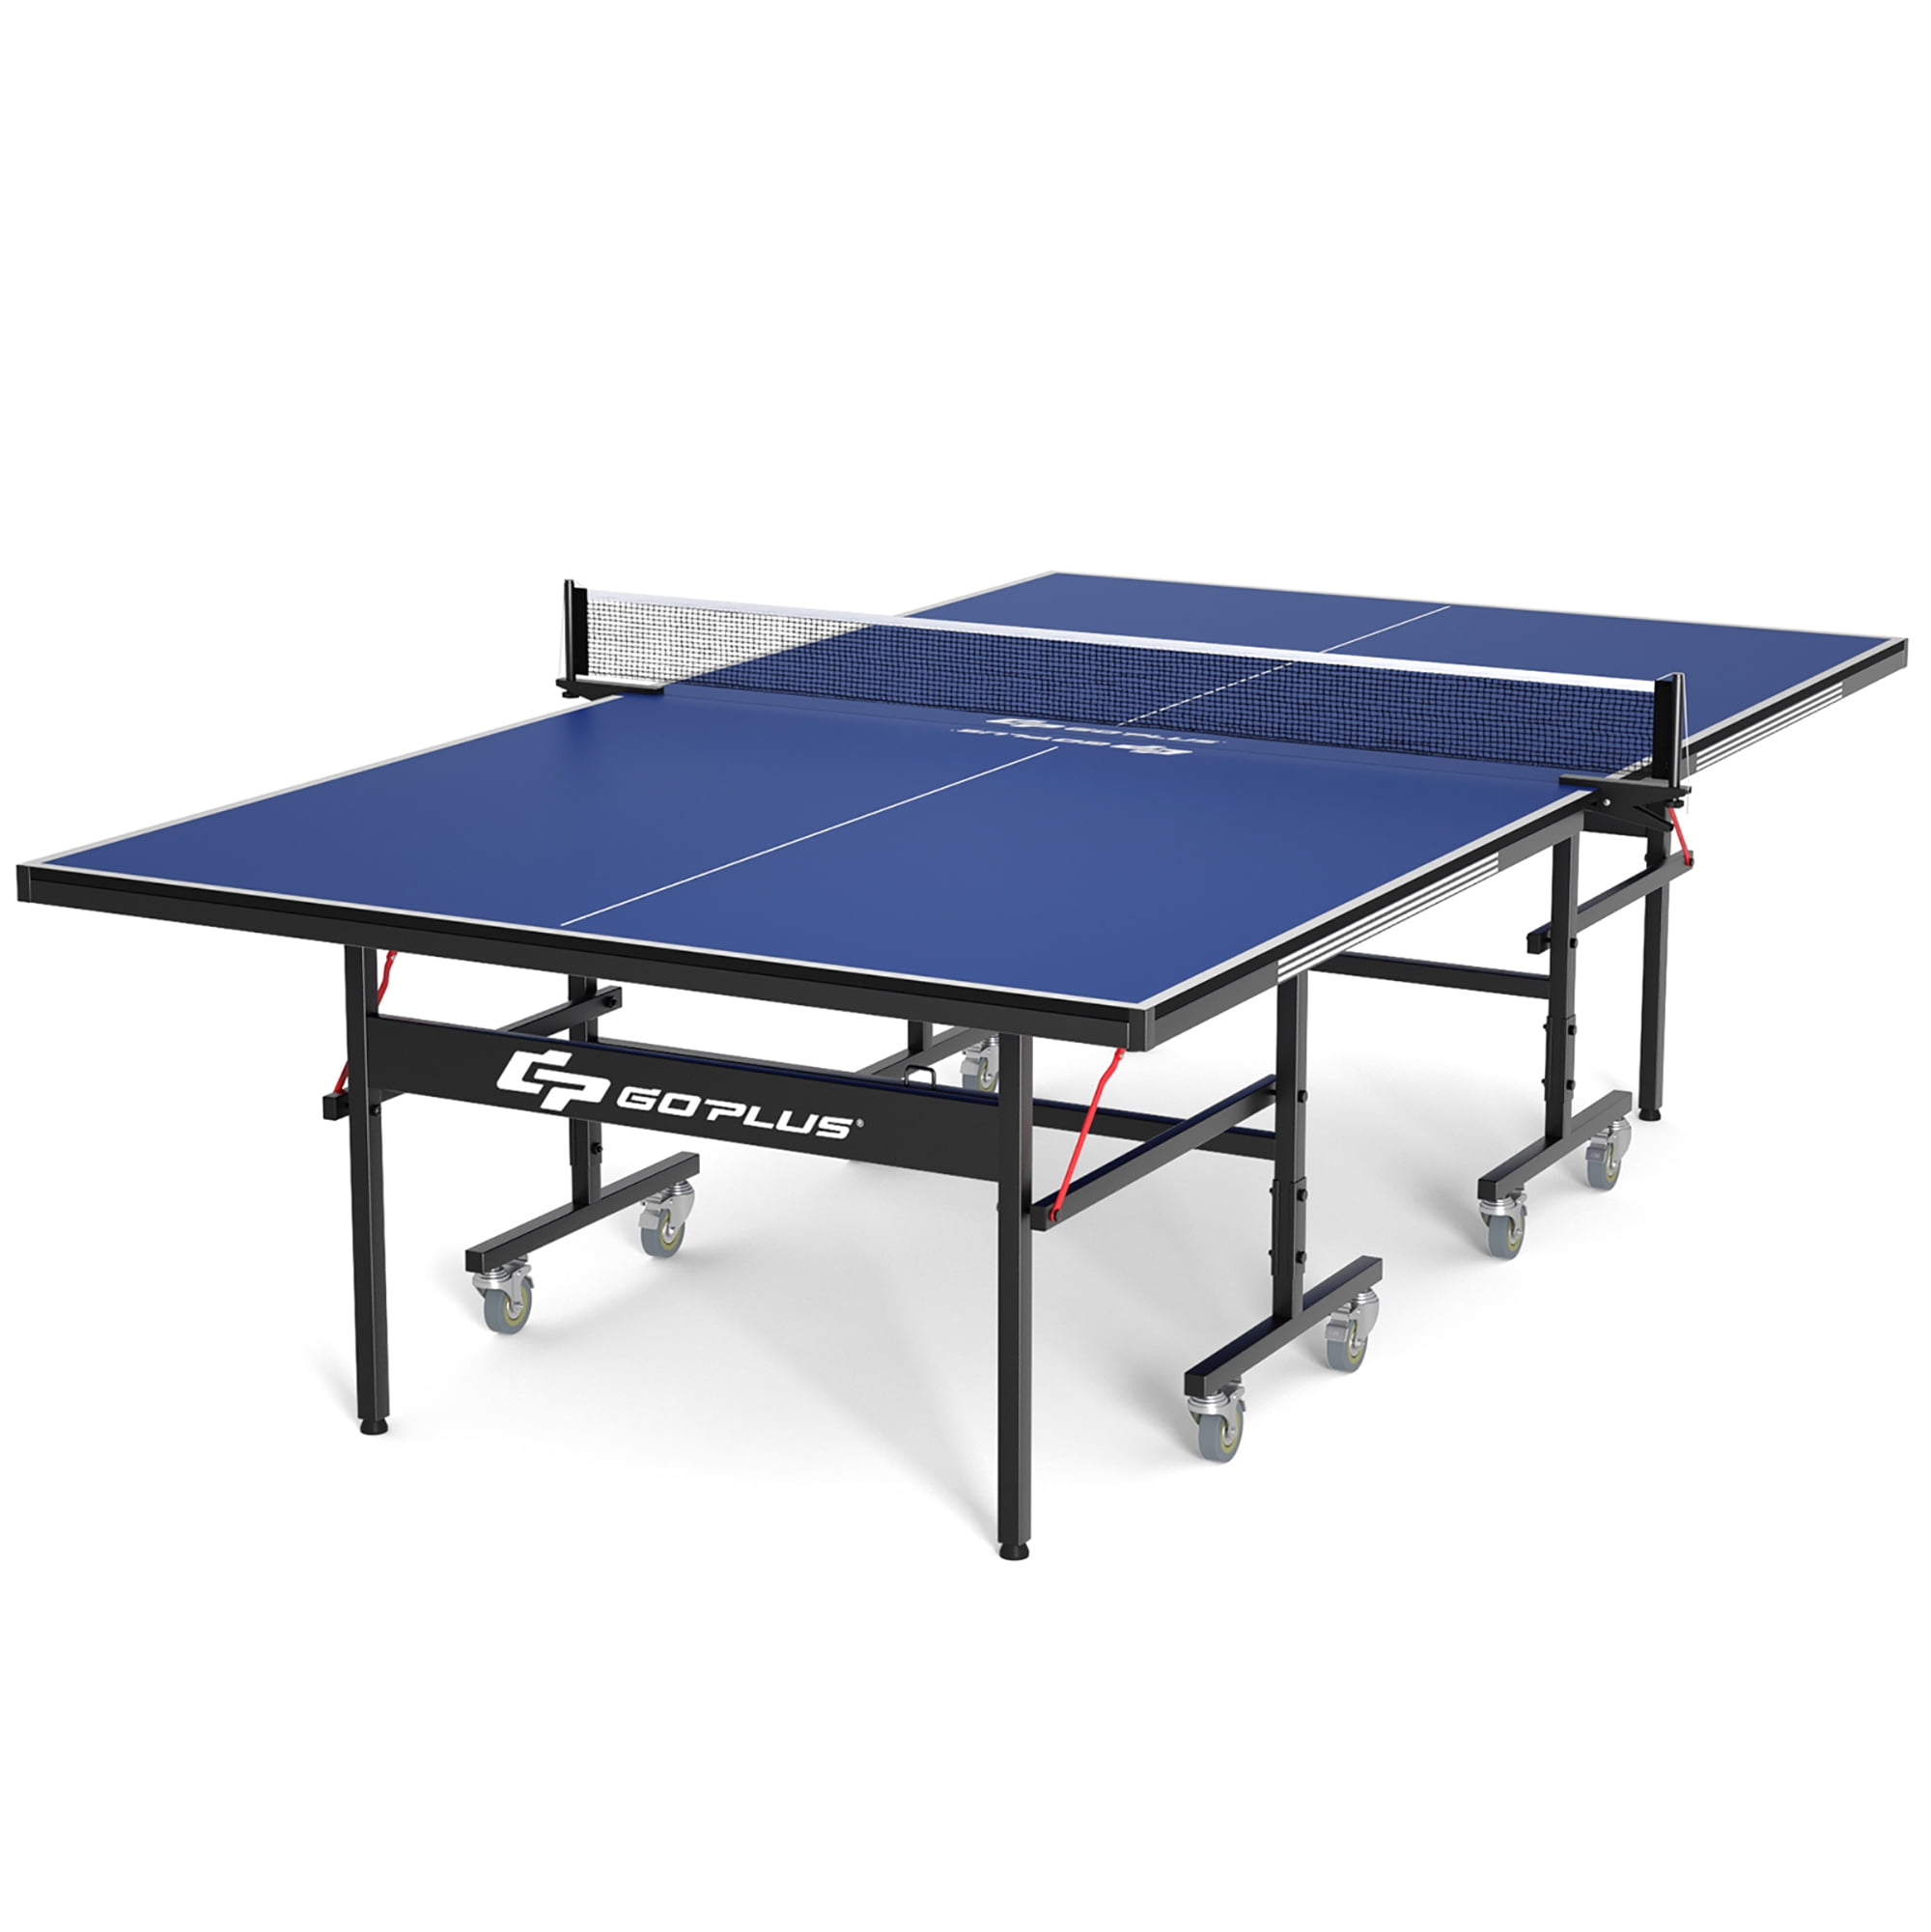 Poolmaster Floating Table Tennis Game - Walmart.com